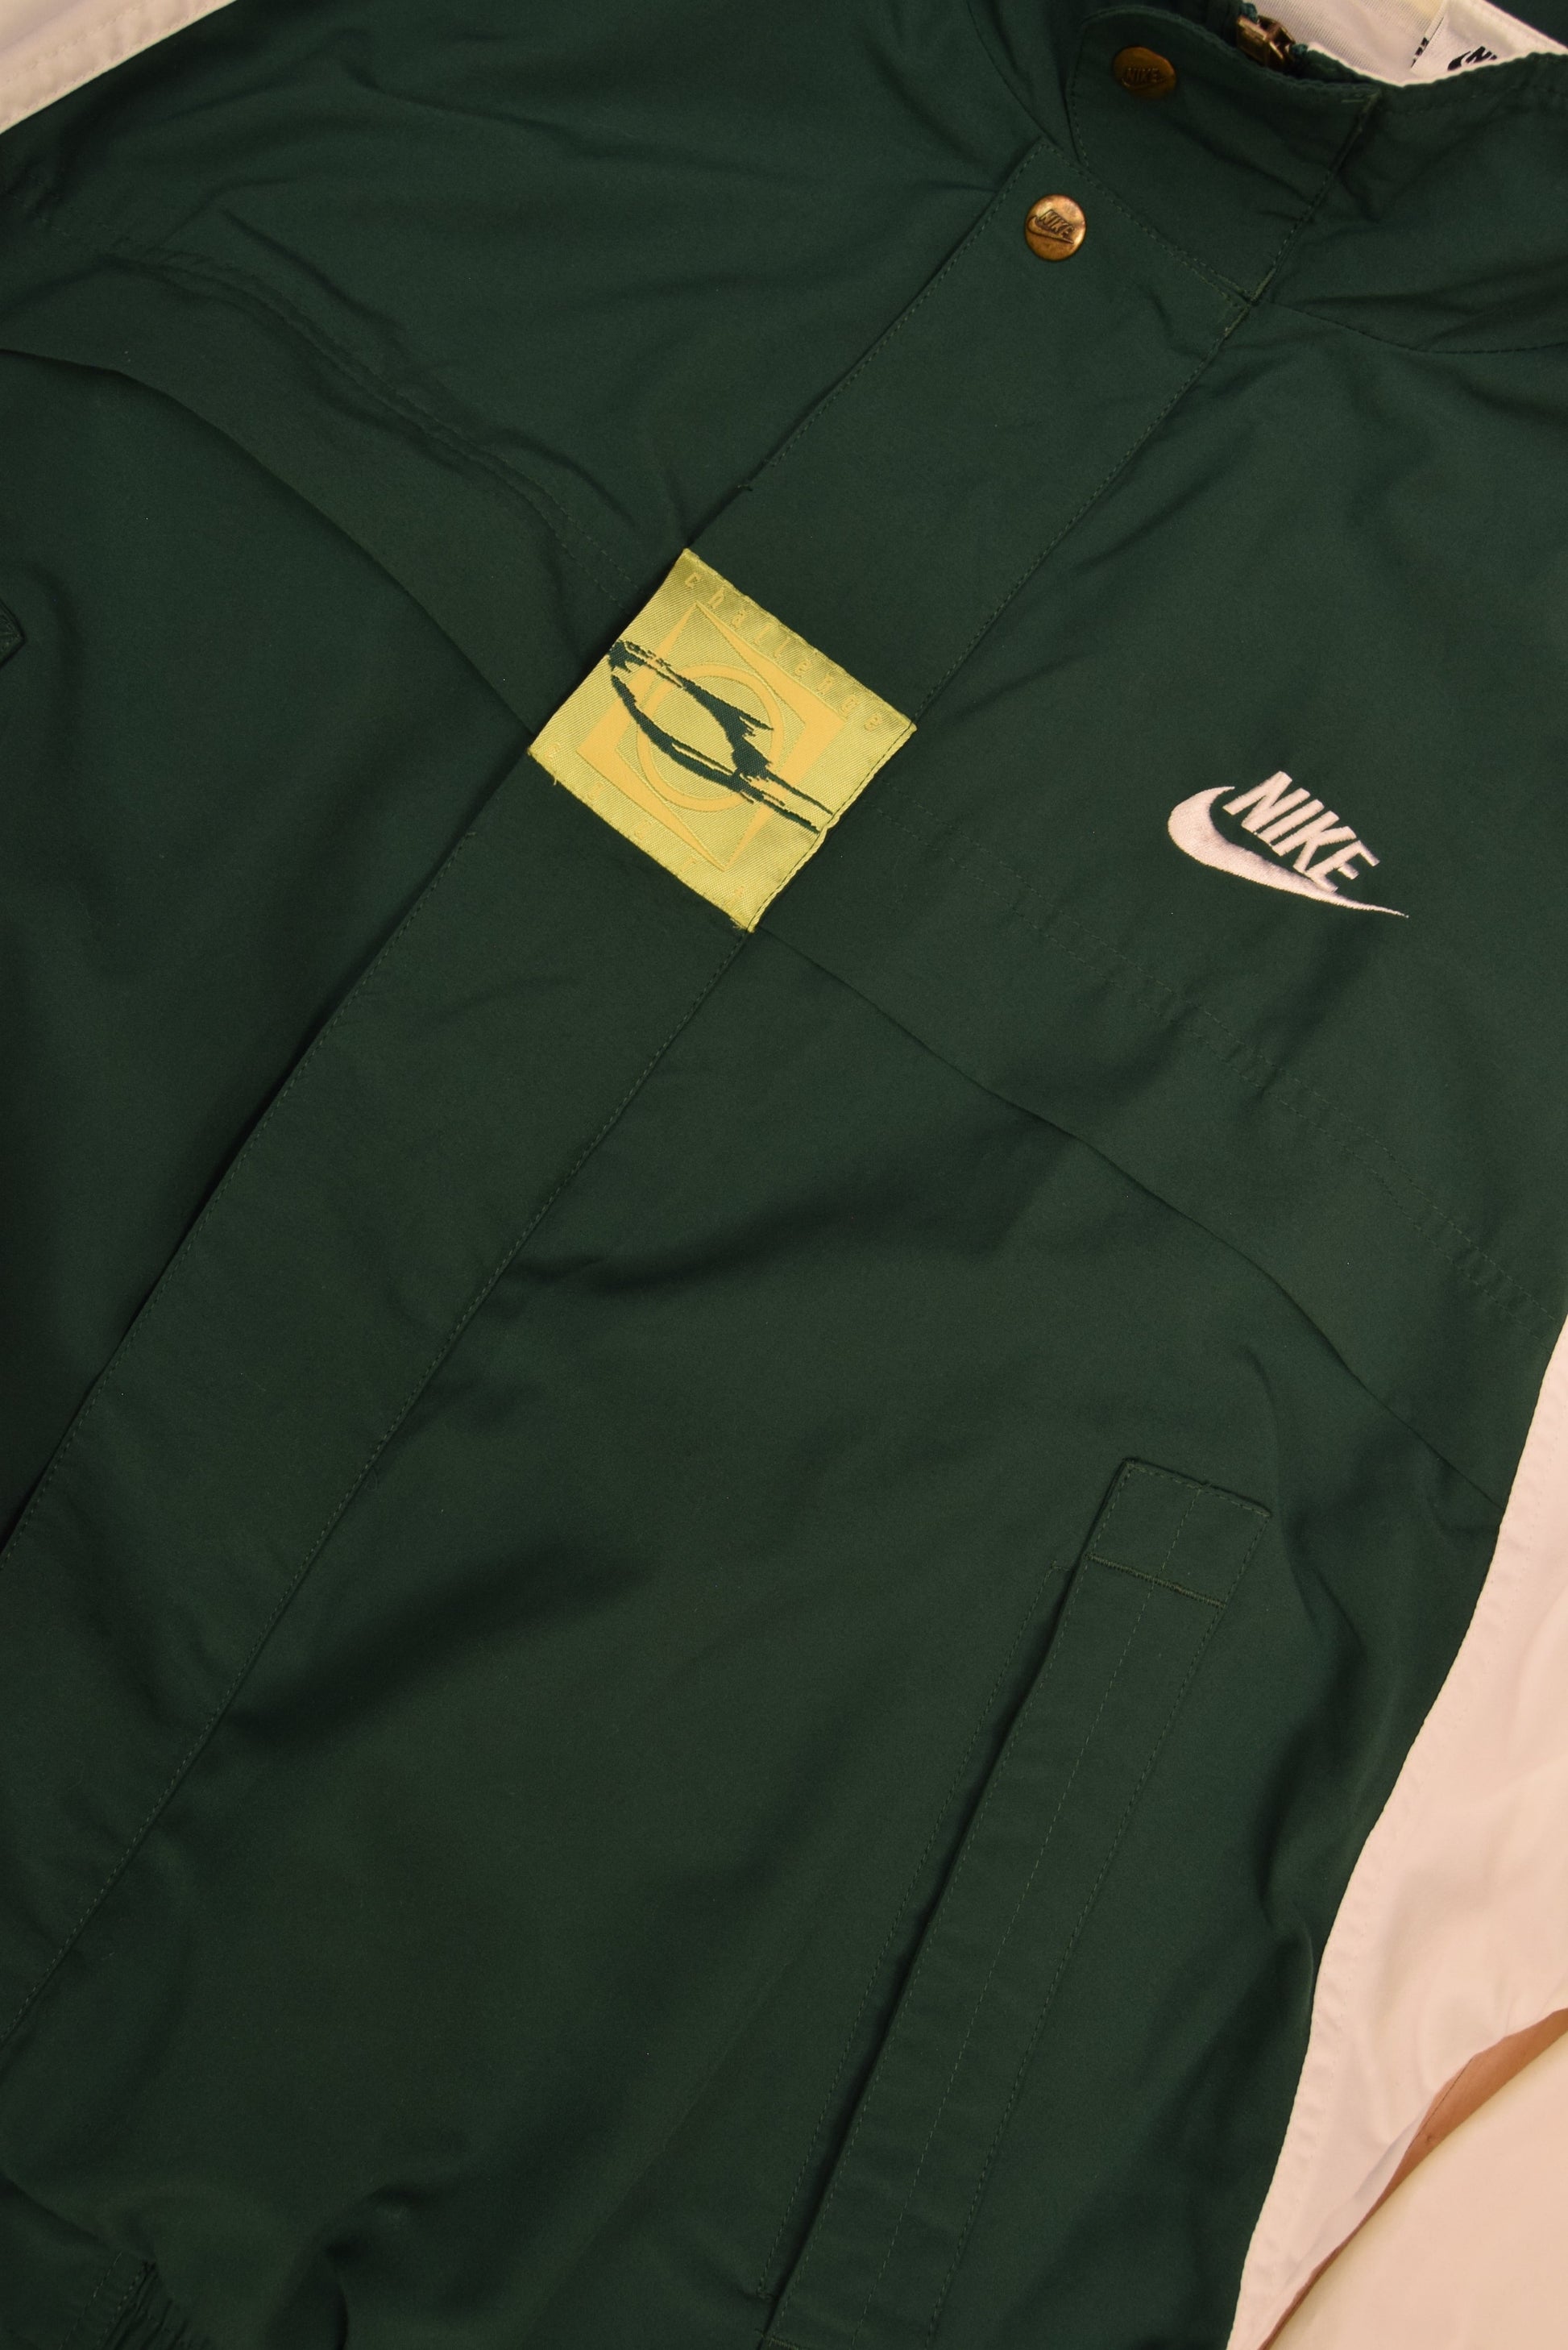 90's Nike Challenge Court Jacket Size L Agassi